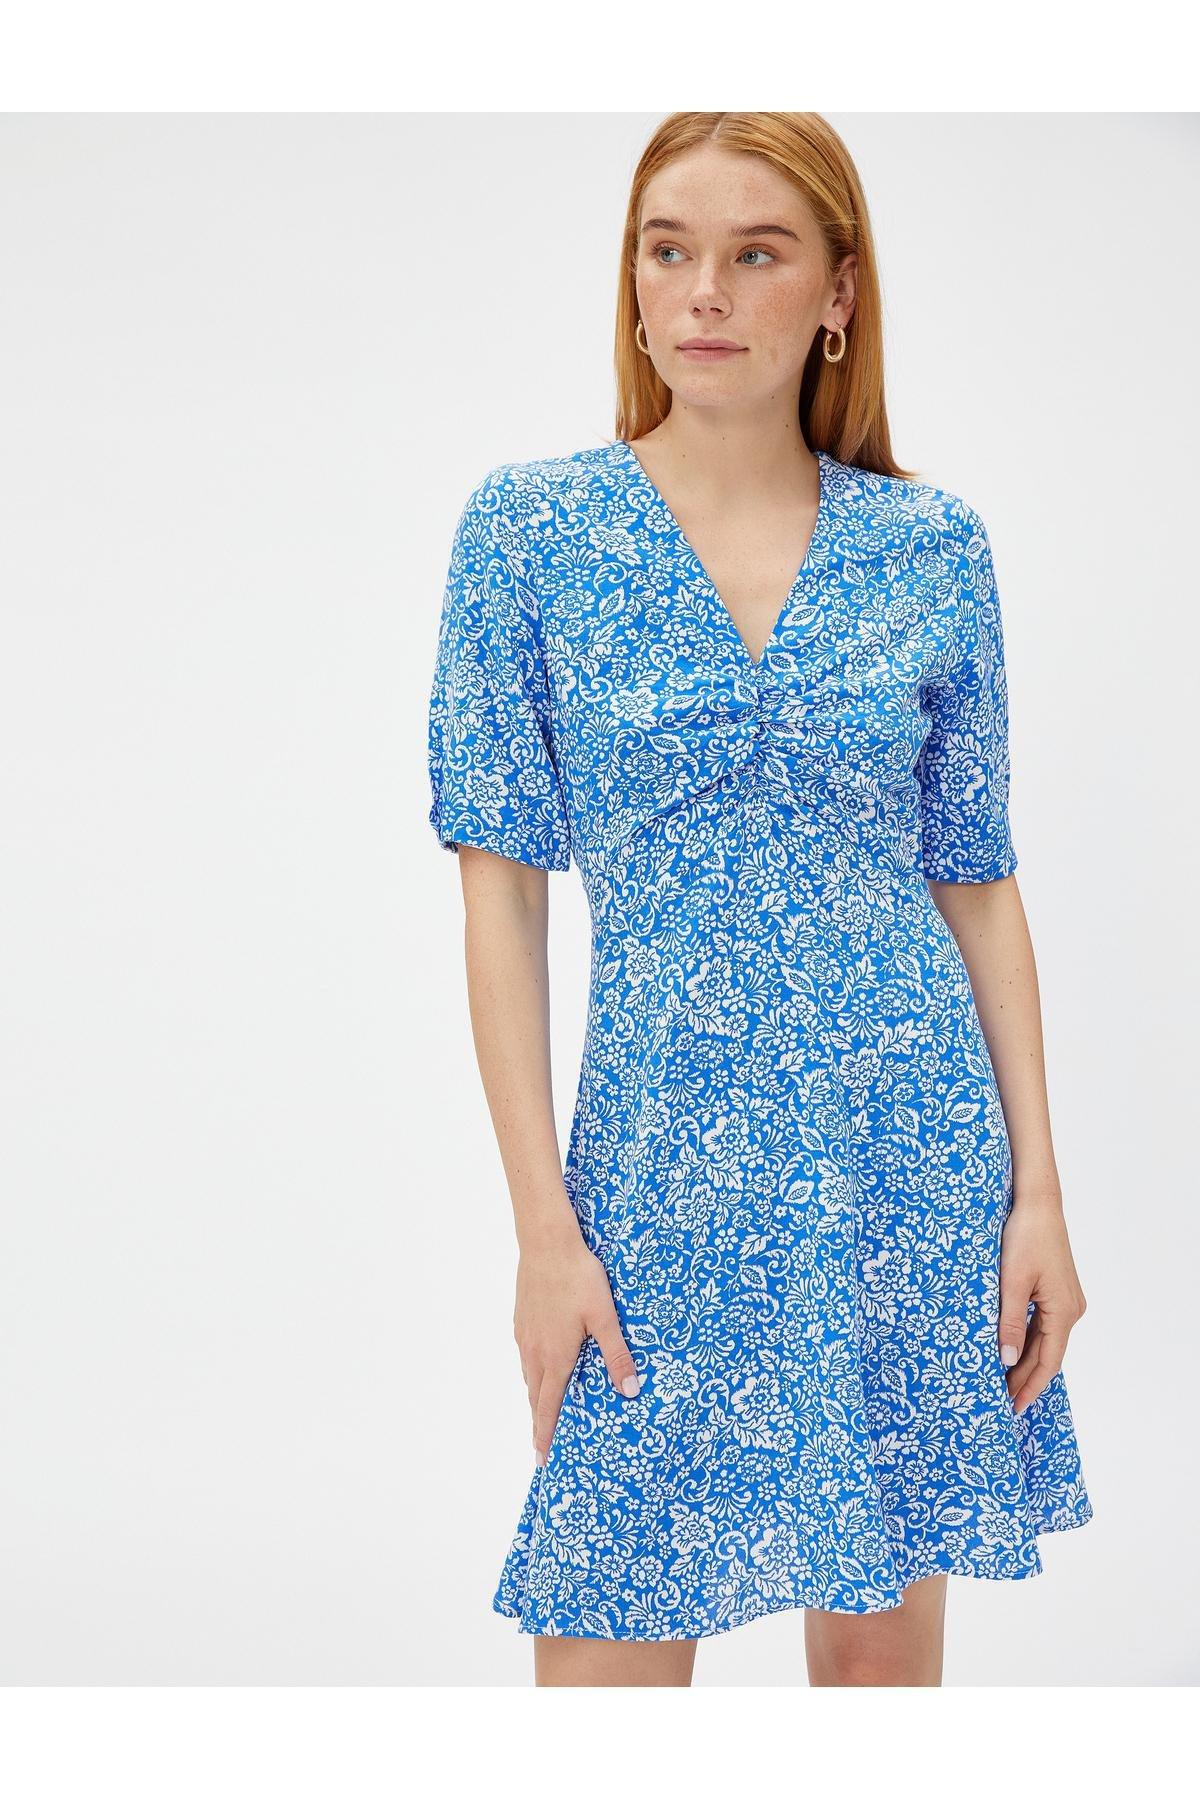 Koton - Blue Pattern Short Floral Dress